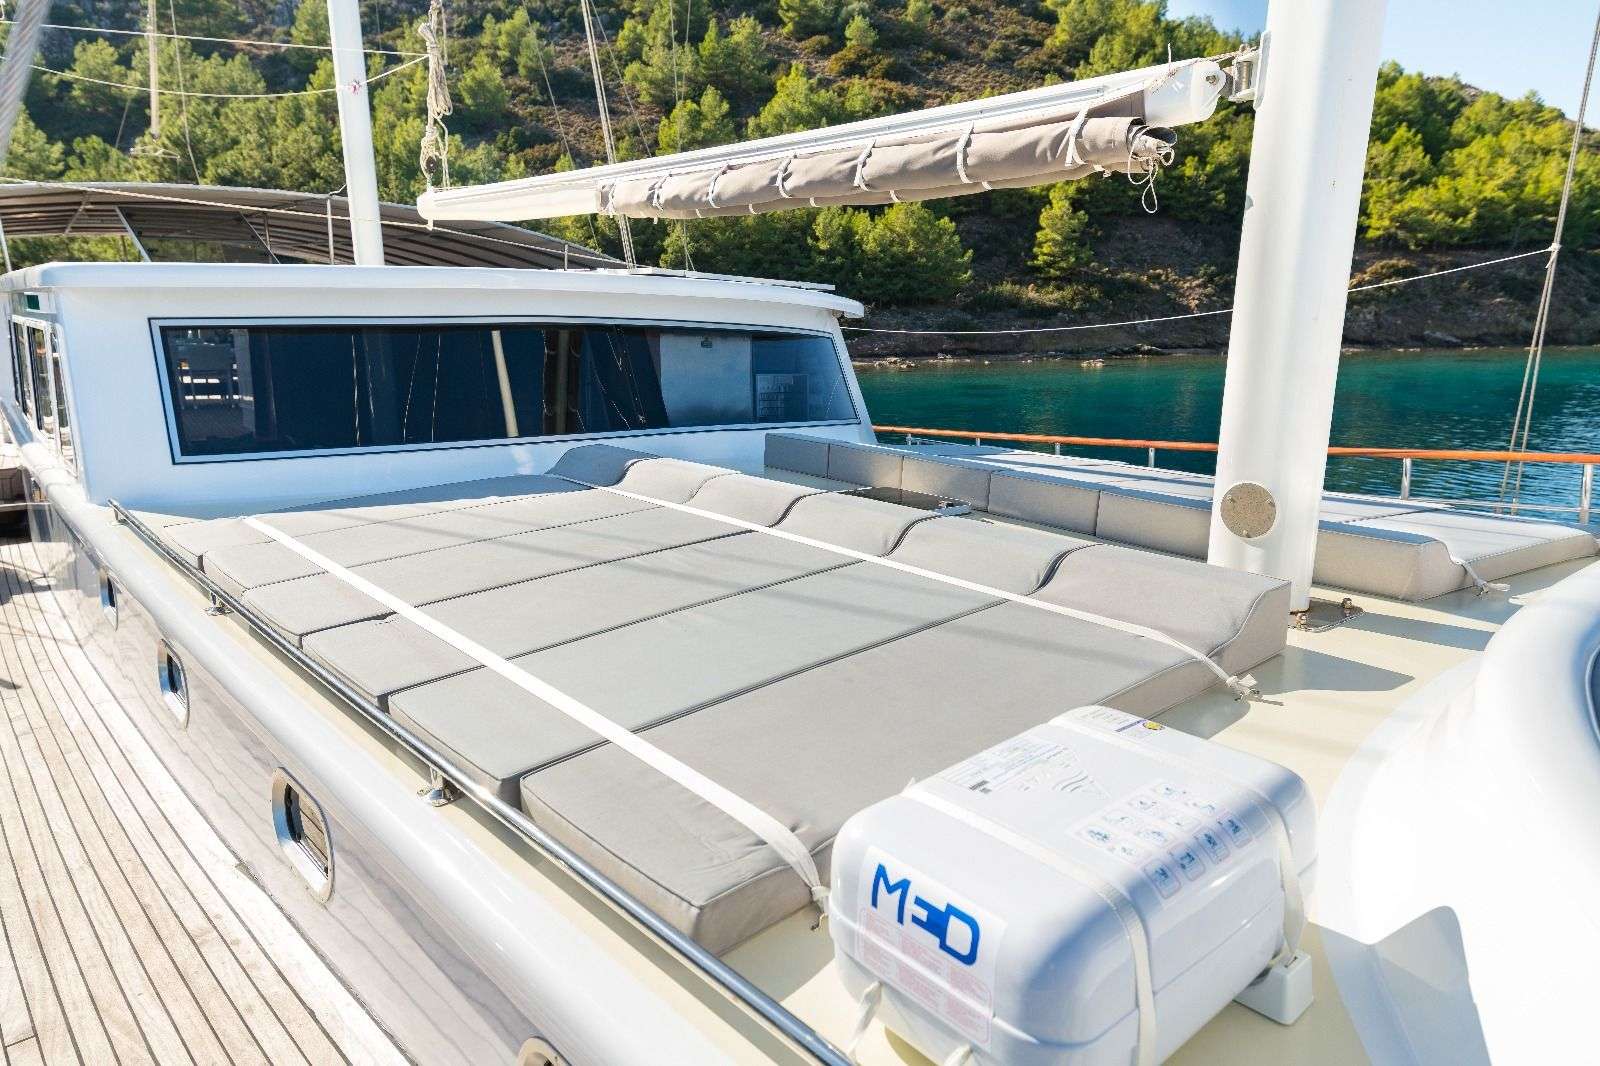 koray ege - Yacht Charter Istanbul & Boat hire in Greece & Turkey 3